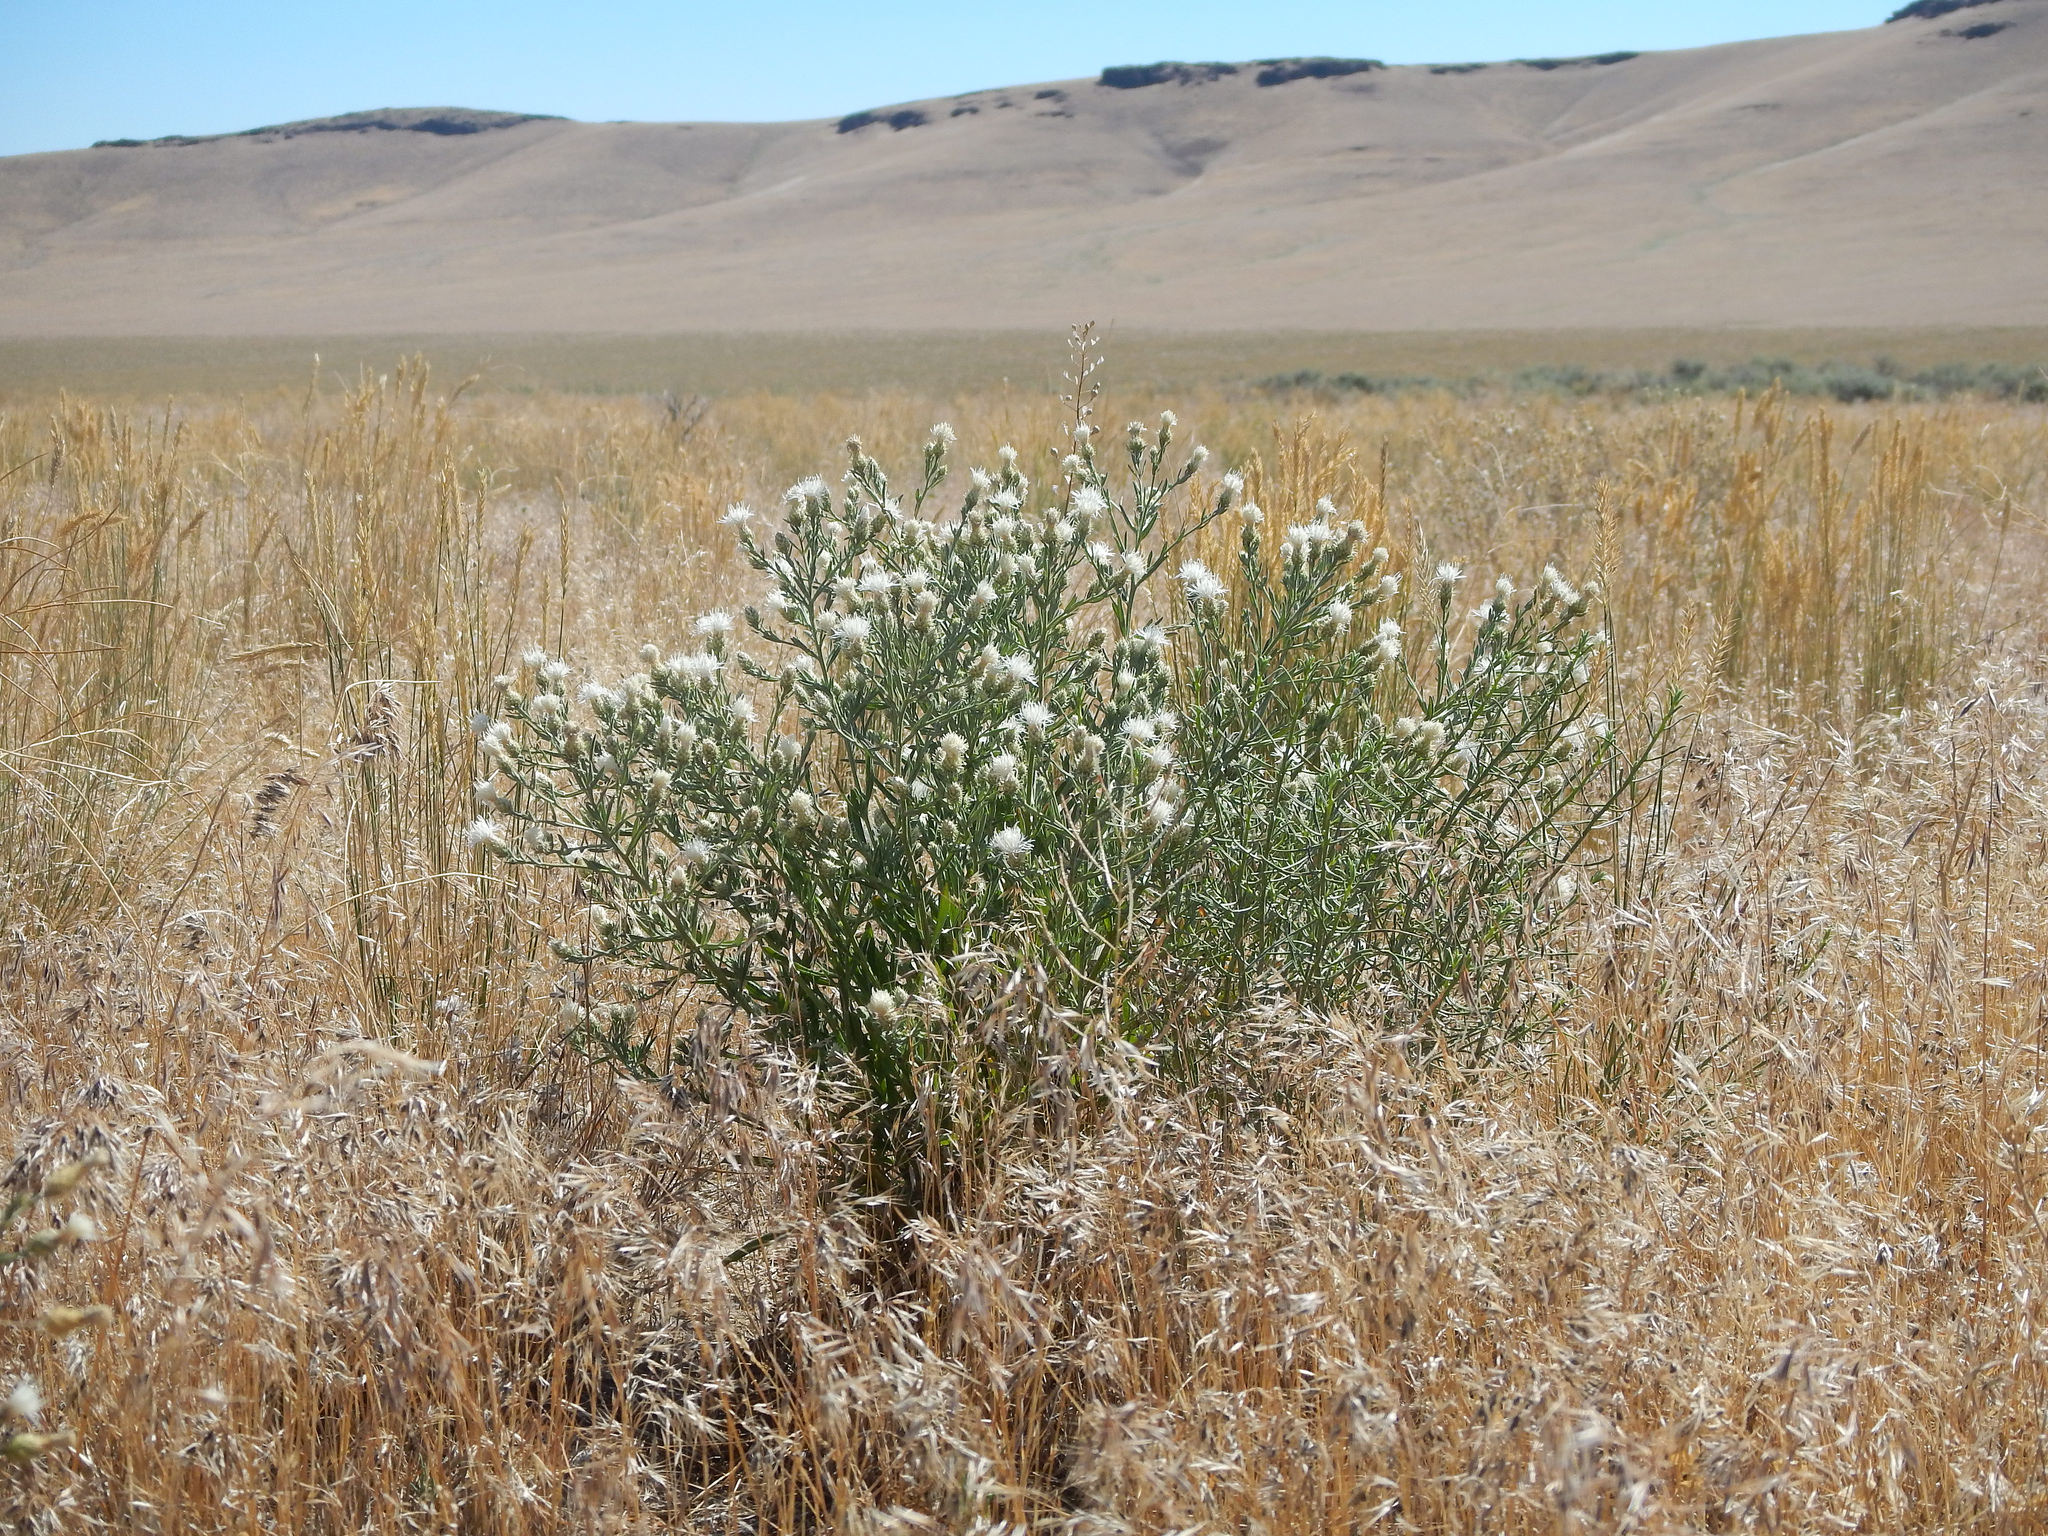 Growth habit in grassland habitat